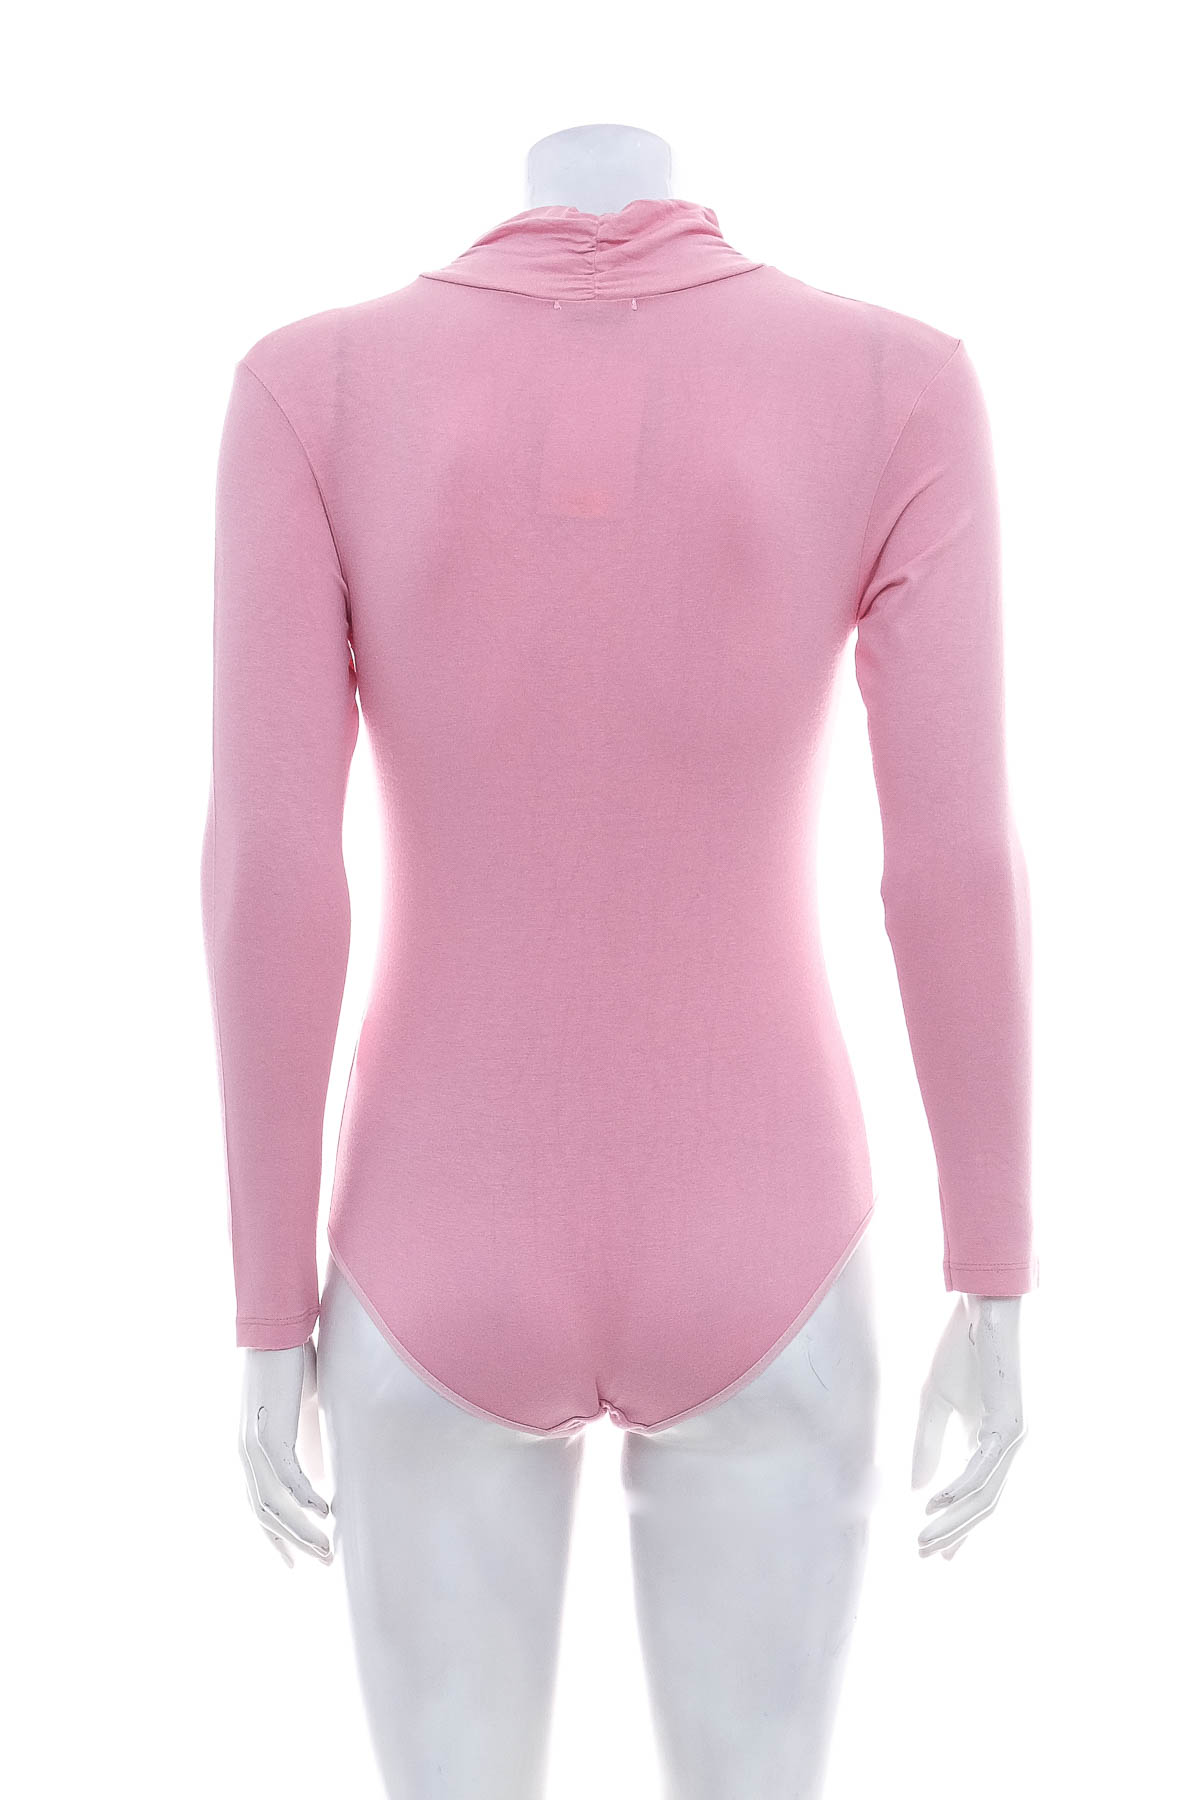 Woman's bodysuit - Christie Collection - 1